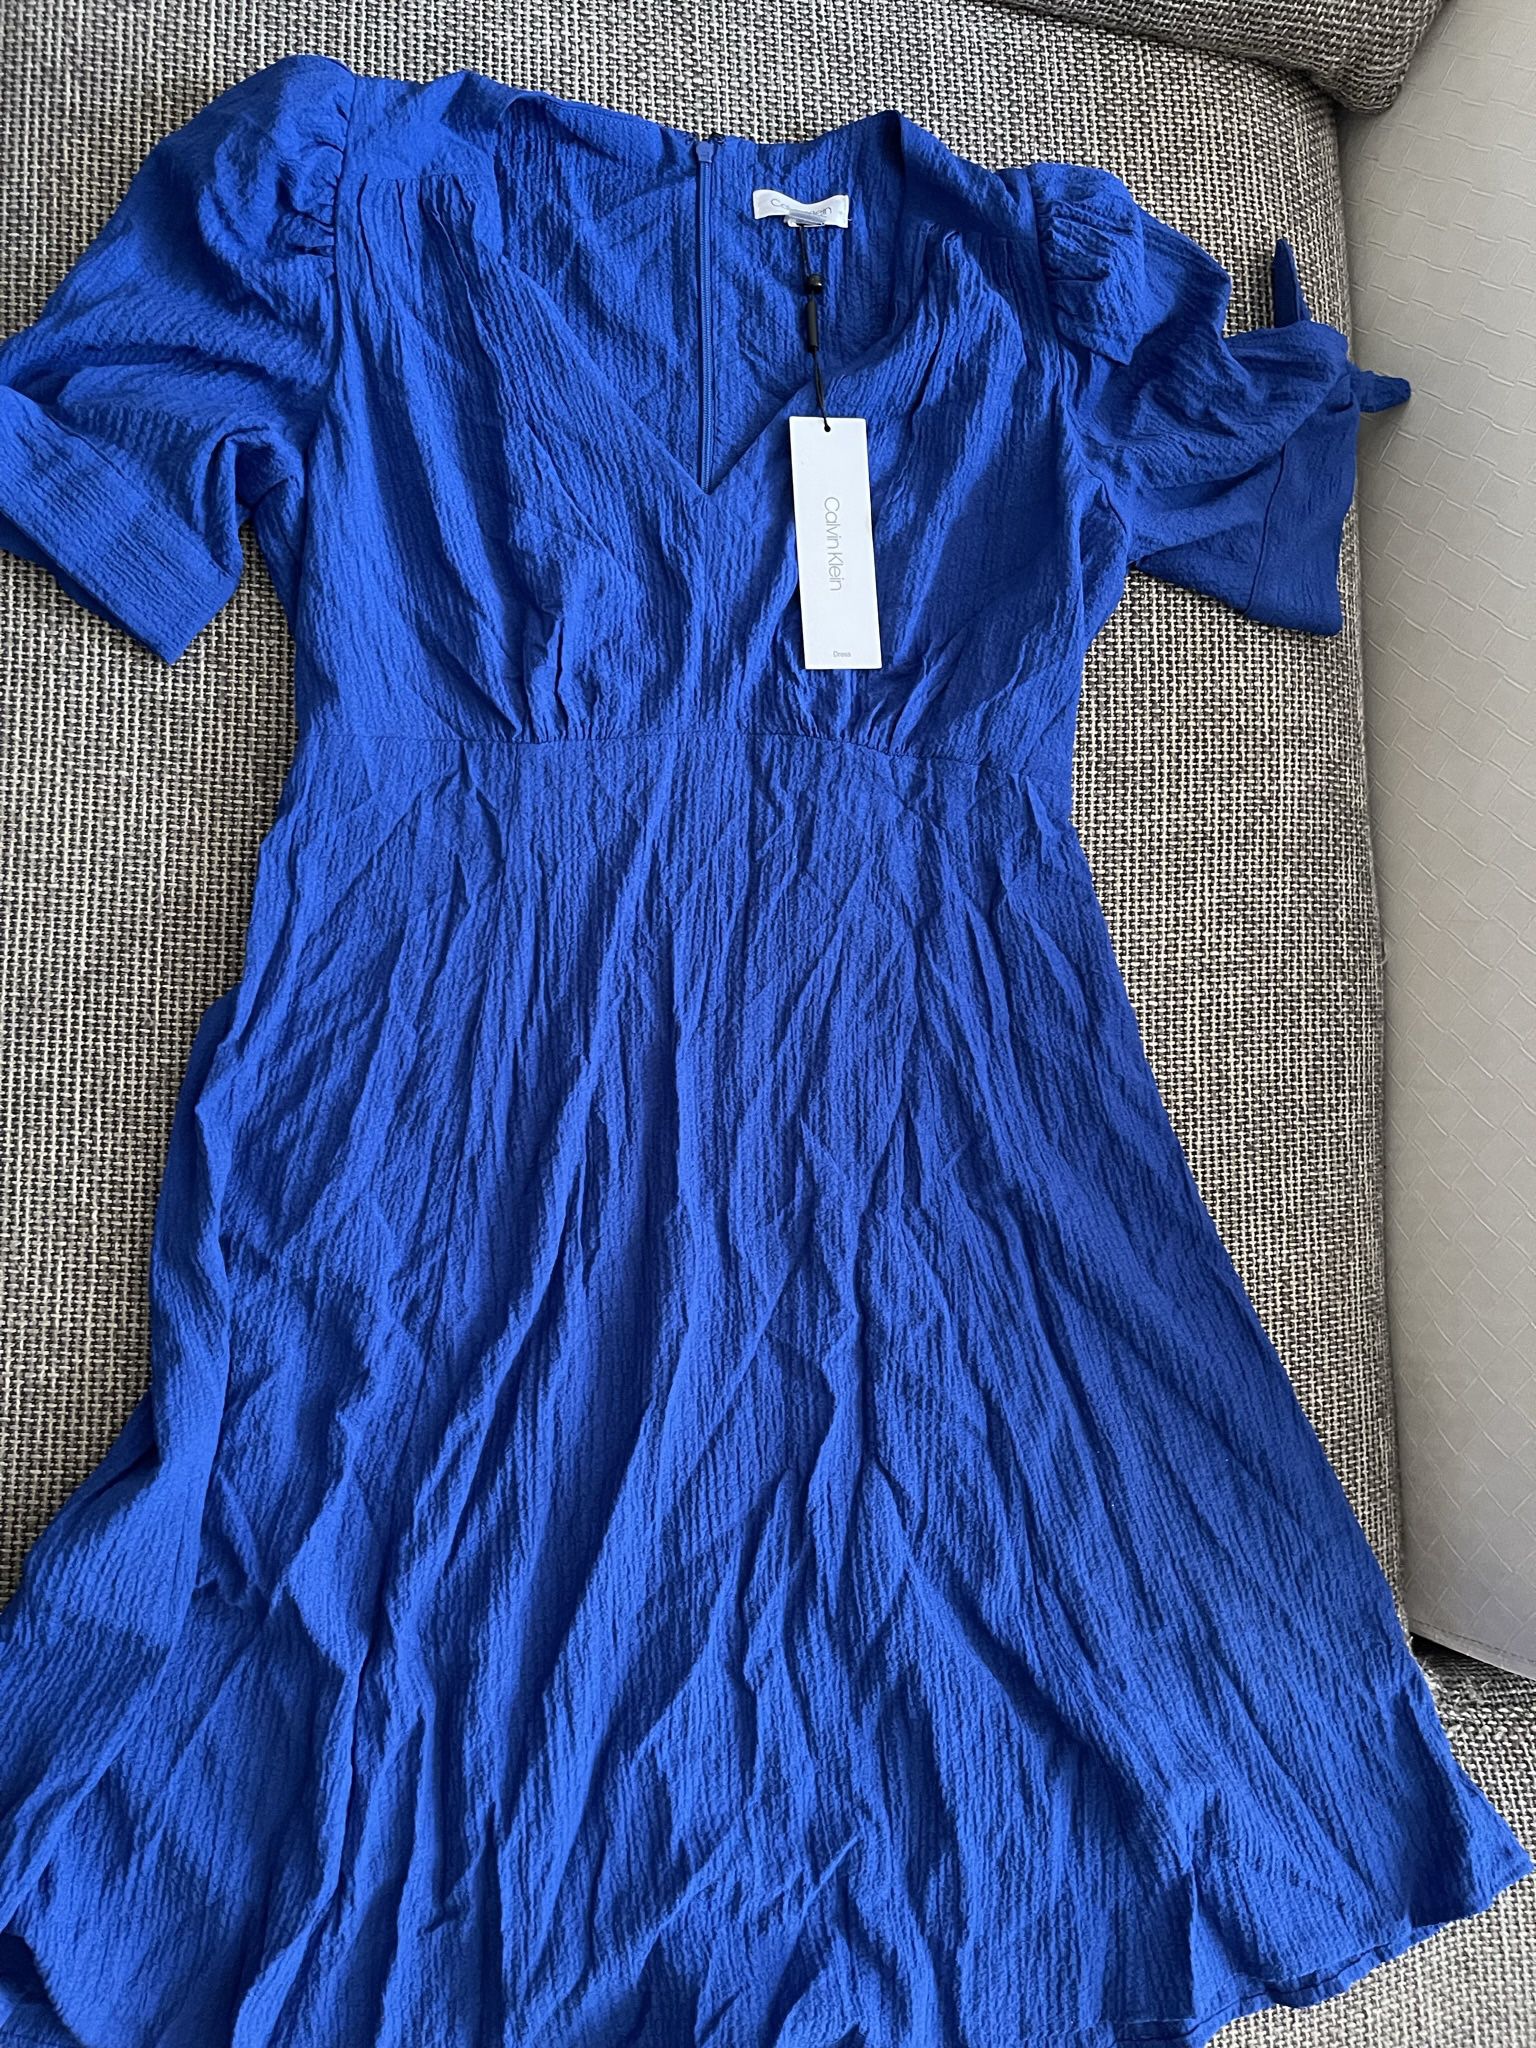 Calvin Klein dress size 8